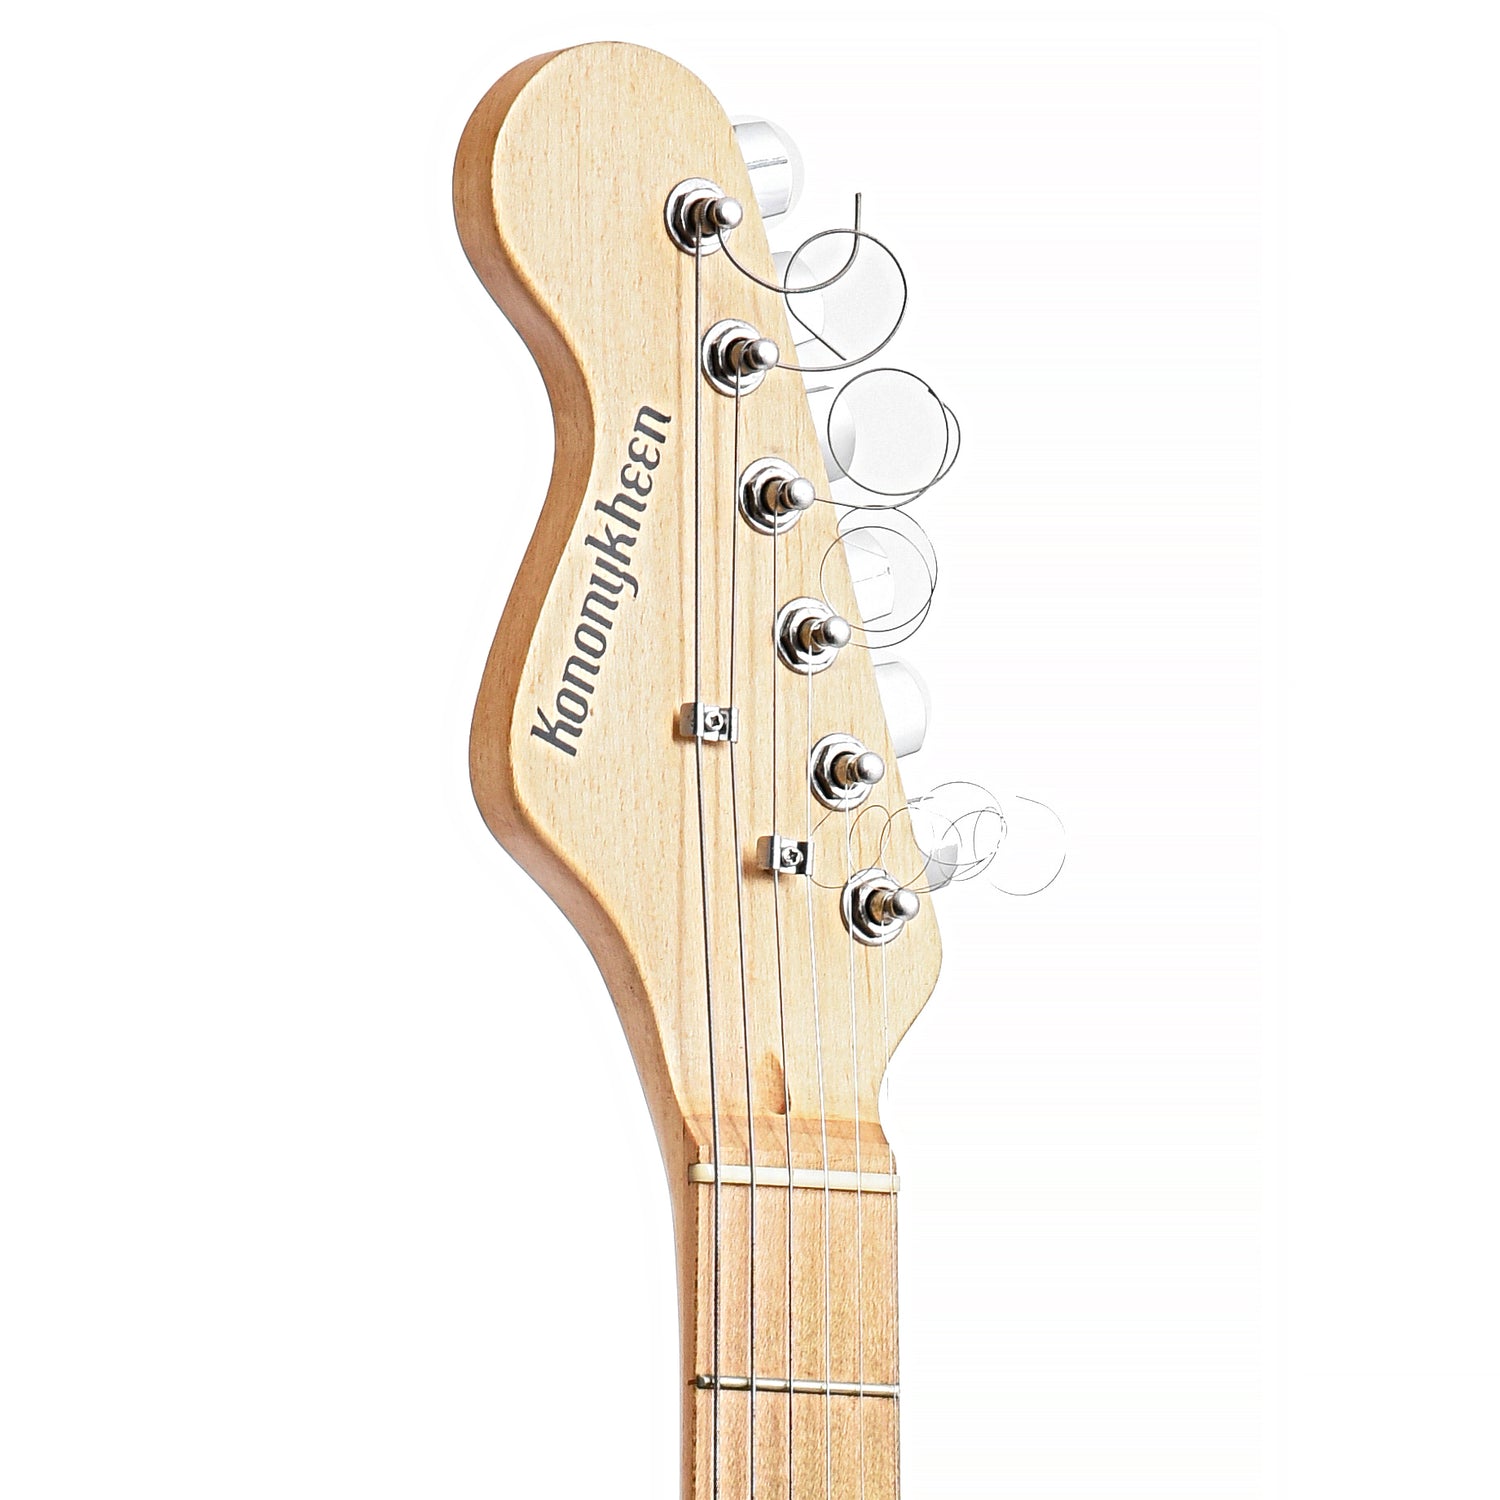 Image 9 of Kononykheen Breed Five (recent) - SKU# 30U-208292 : Product Type Solid Body Electric Guitars : Elderly Instruments